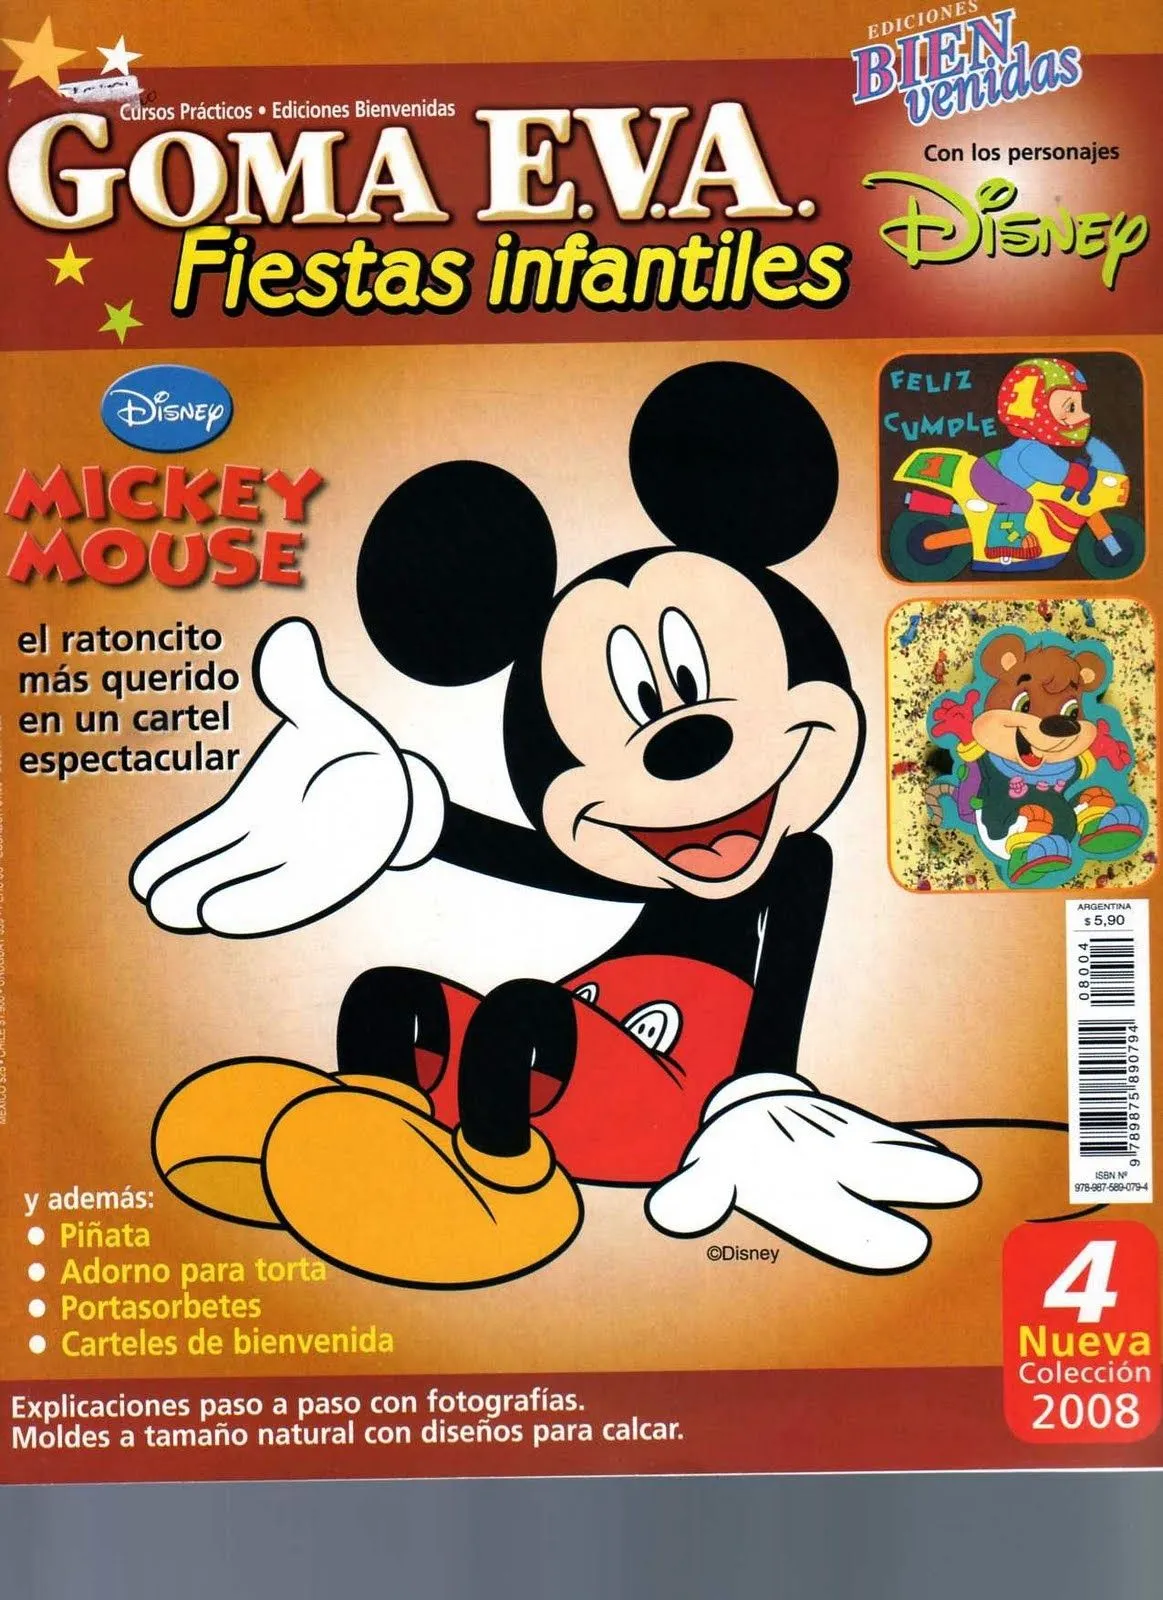 Moldes mickey mouse en foamy | Revistas de Foamy gratis